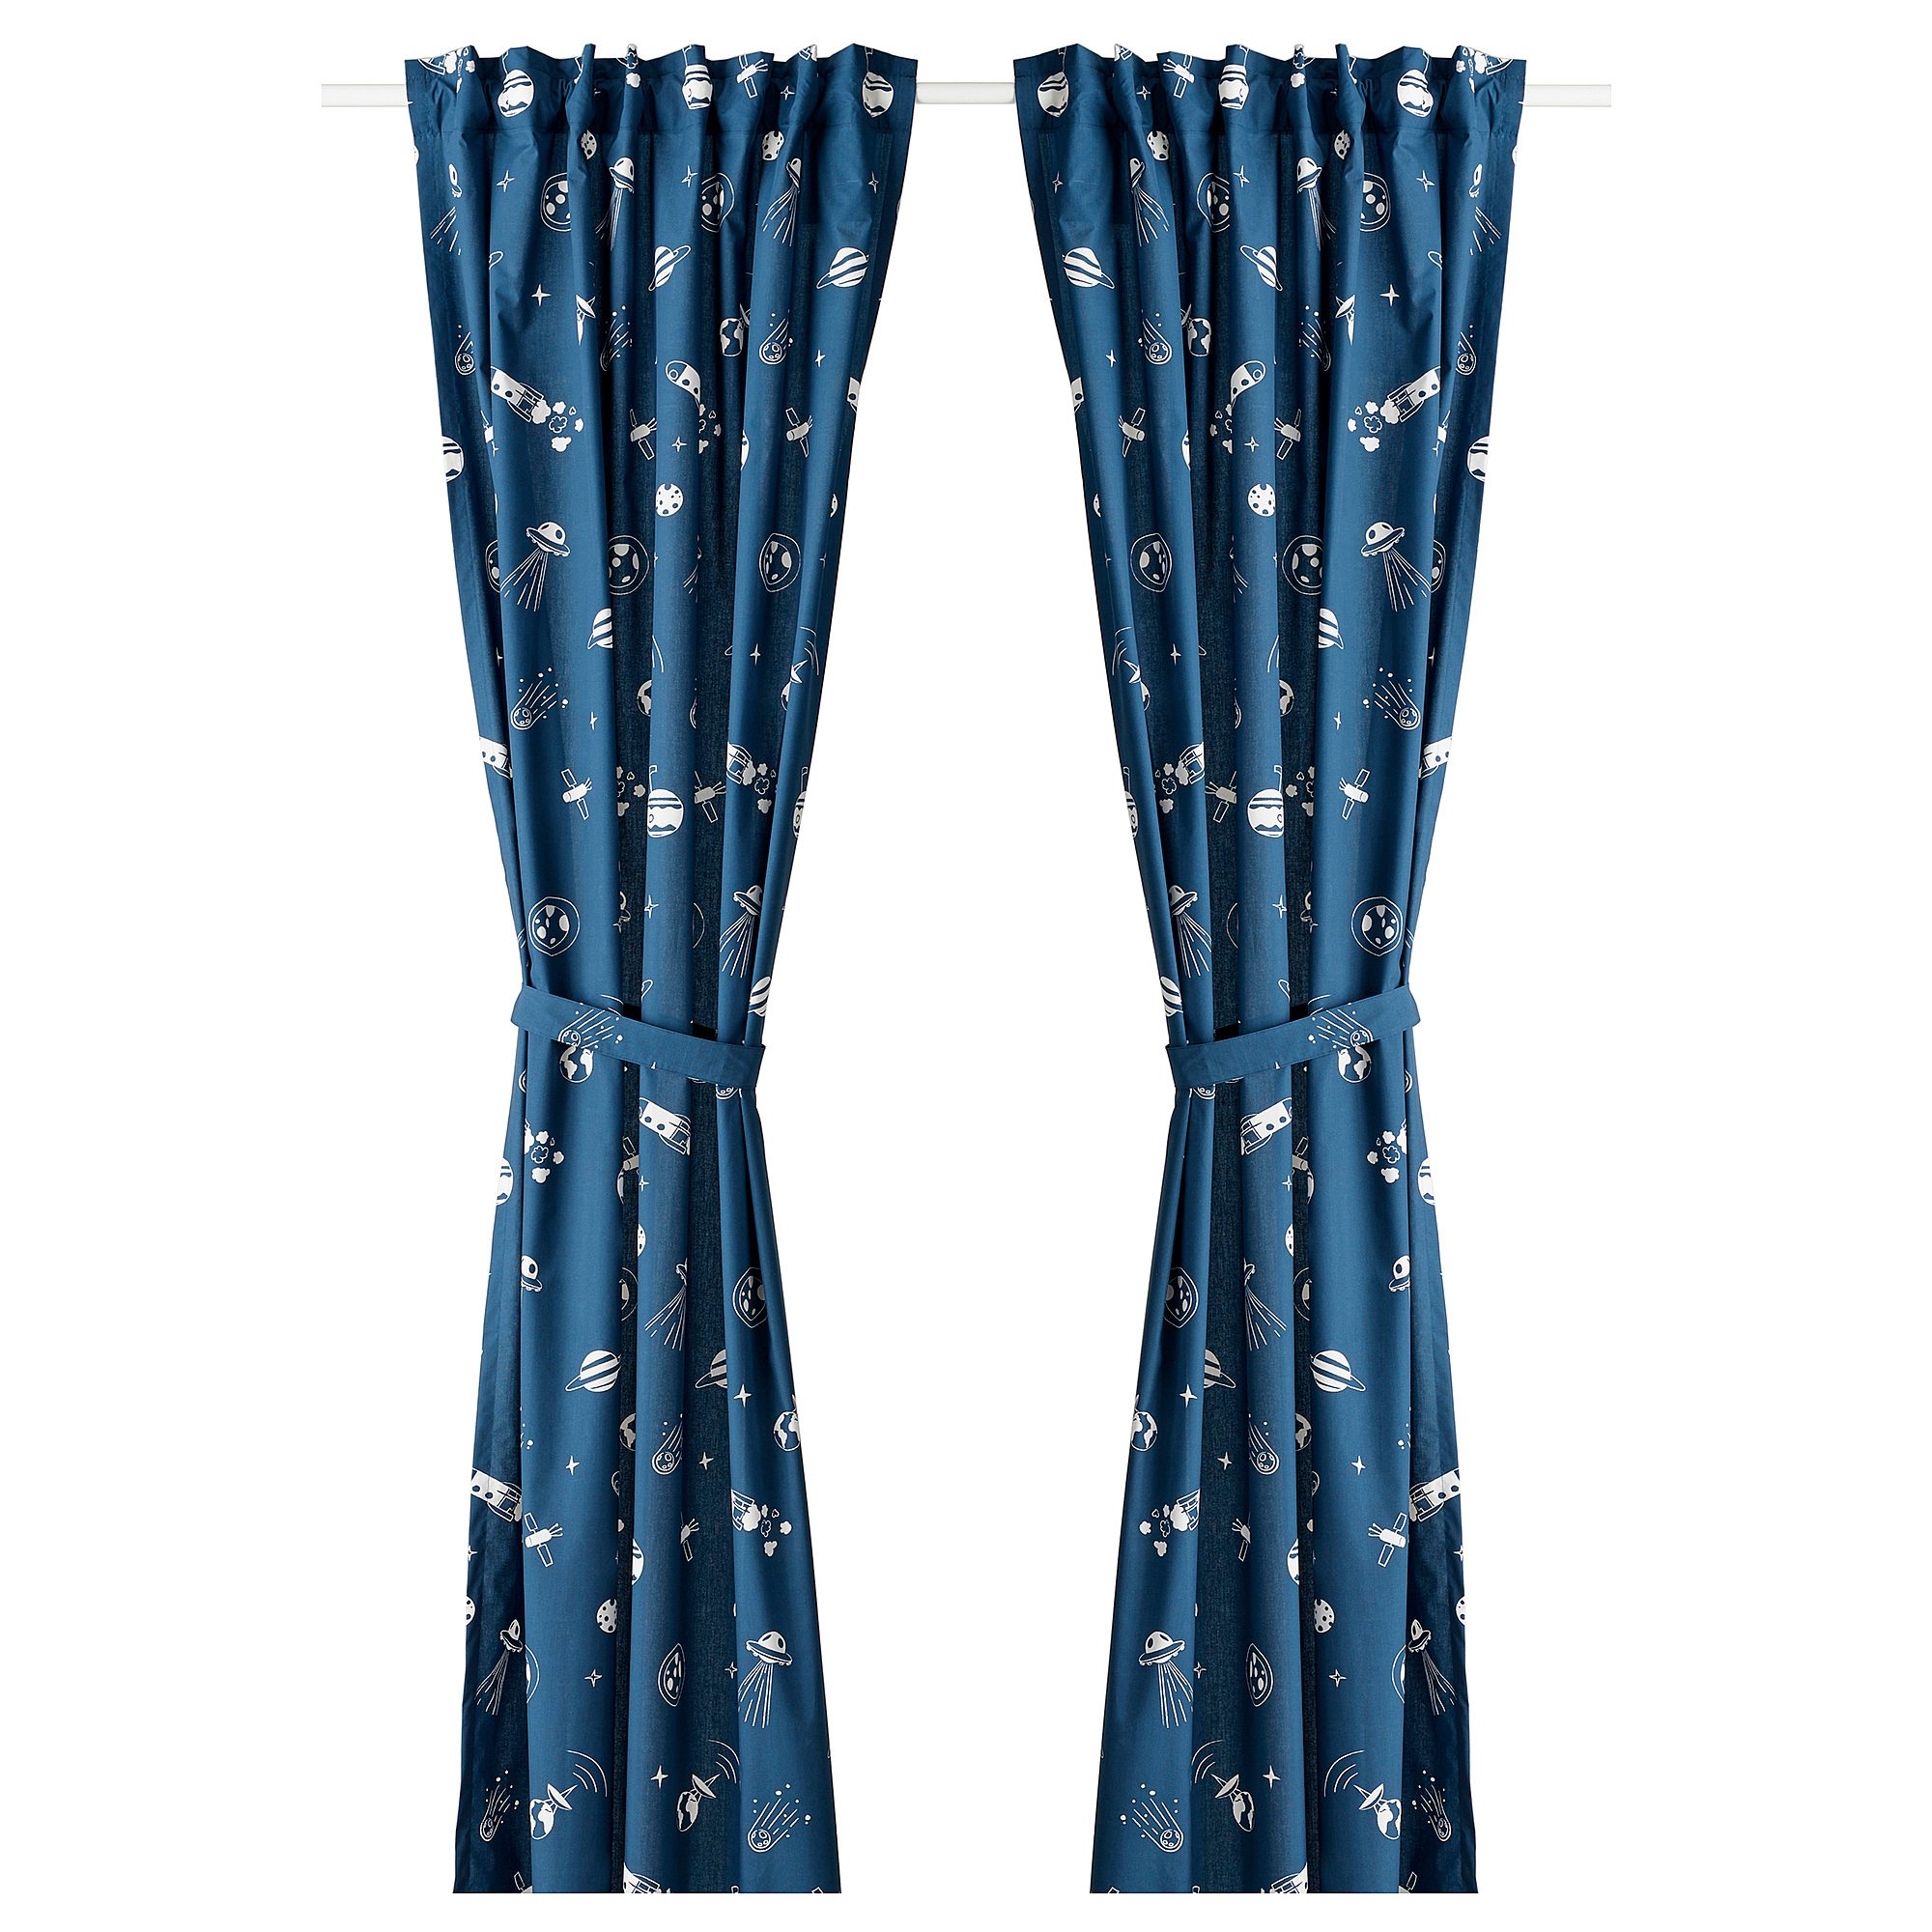 AFTONSPARV curtains with tie-backs, 1 pair